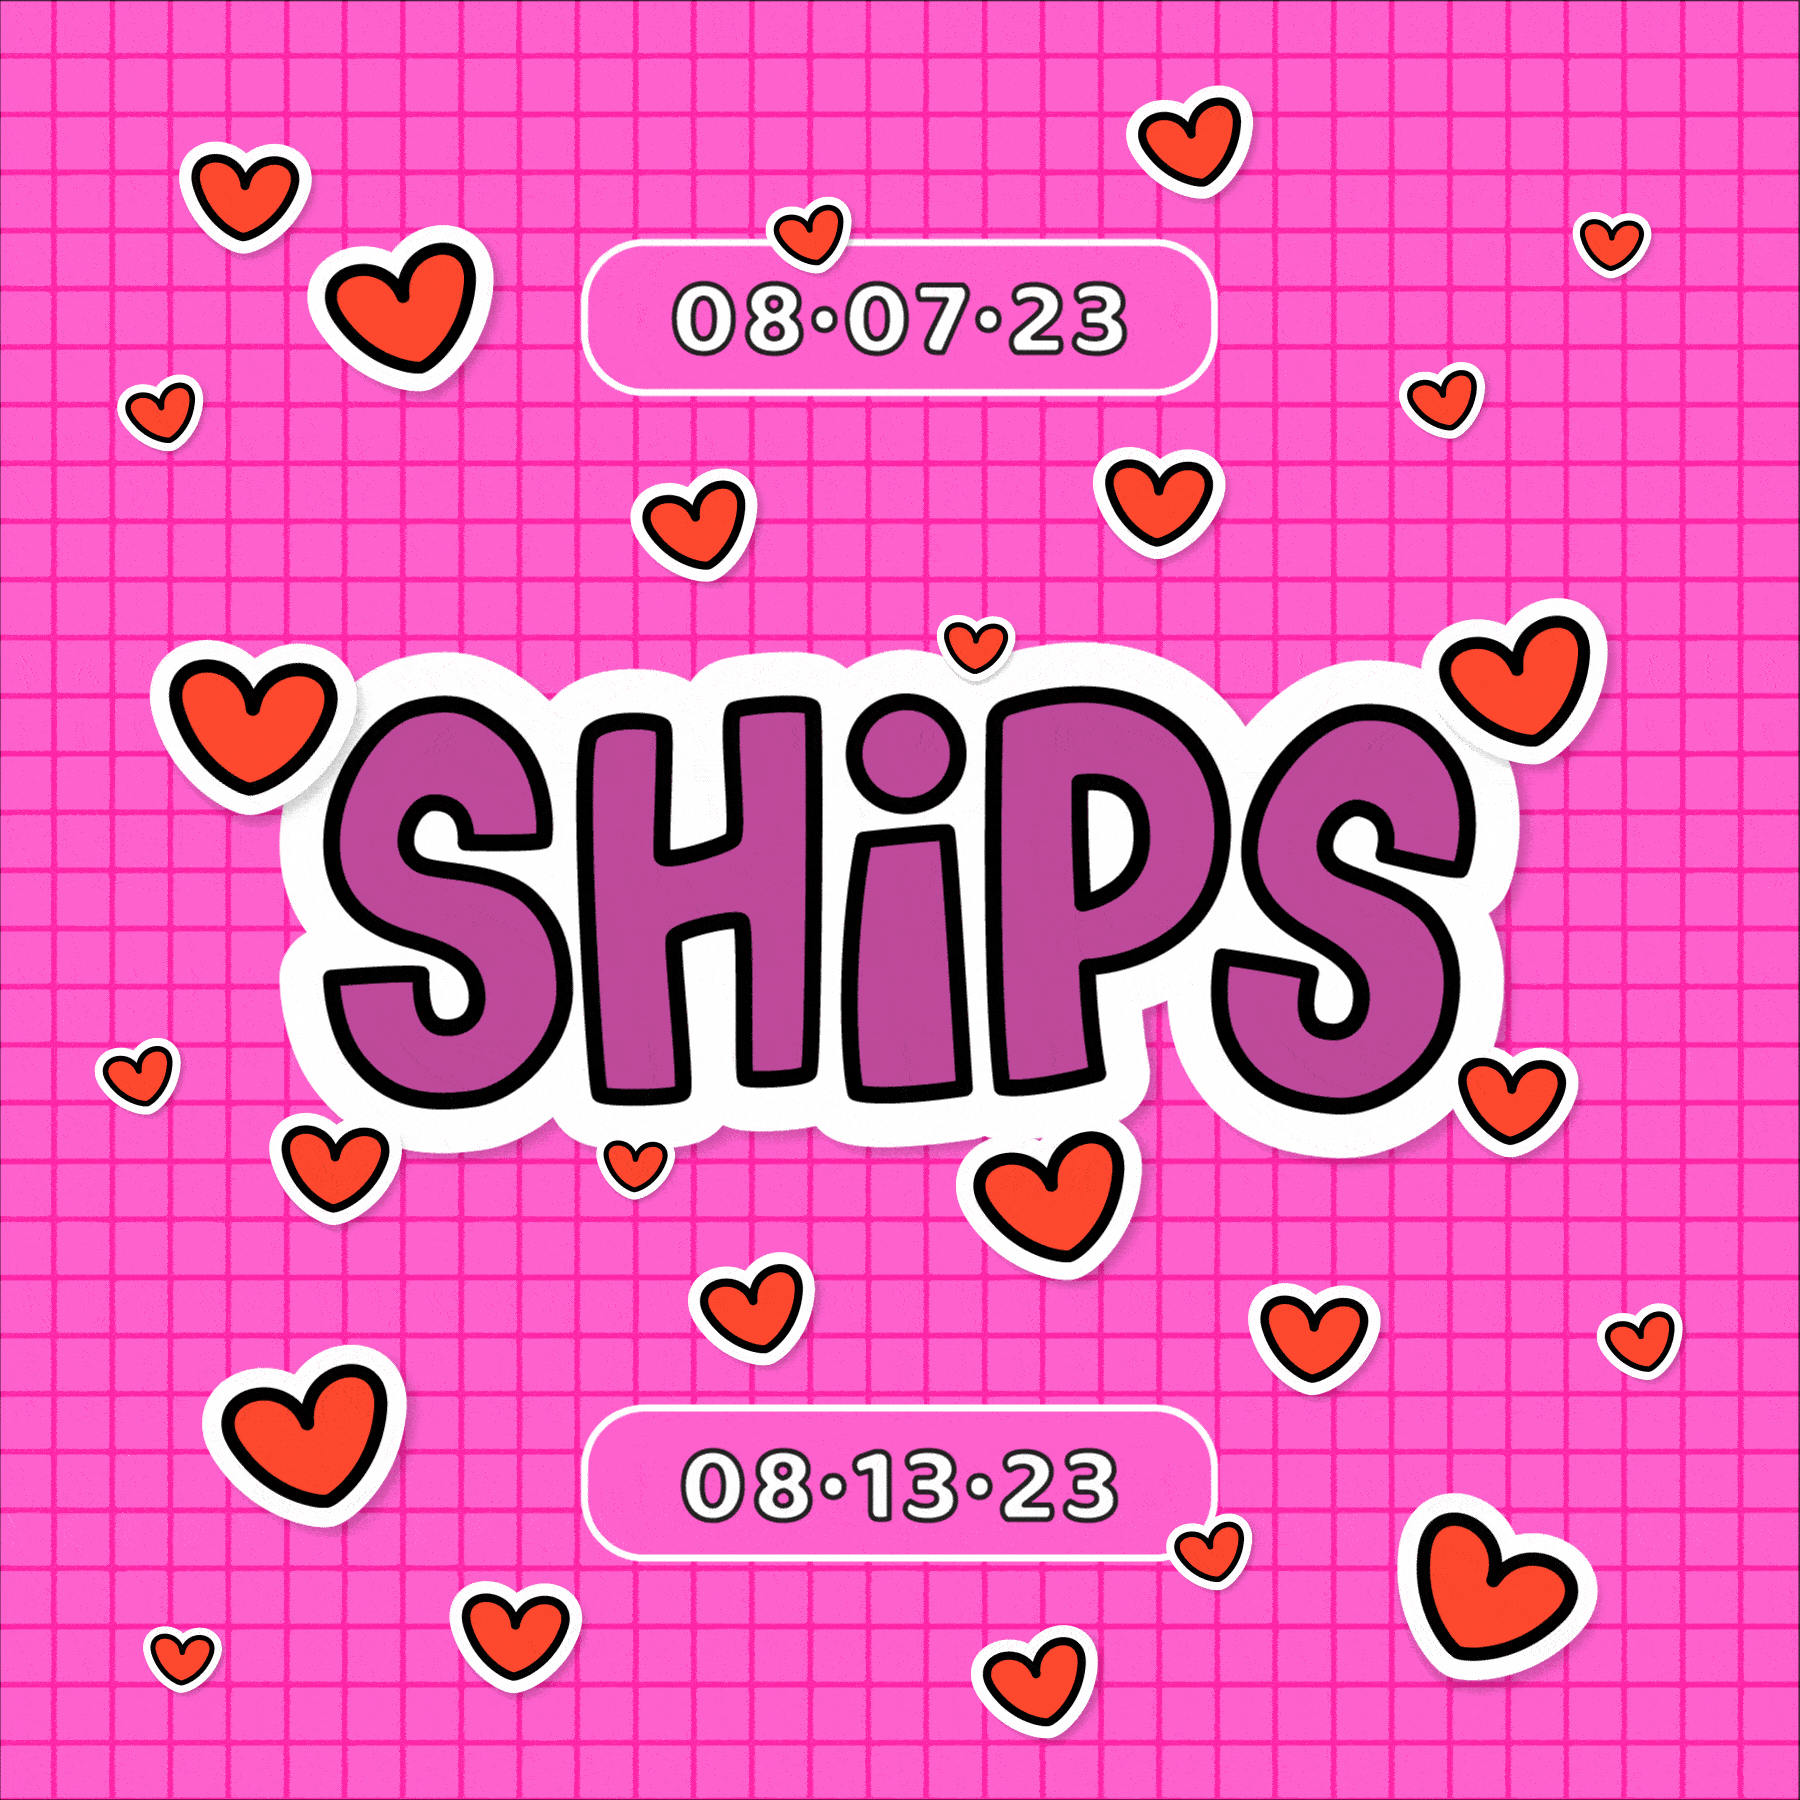 ♥ ShipsTime ♥ on Tumblr